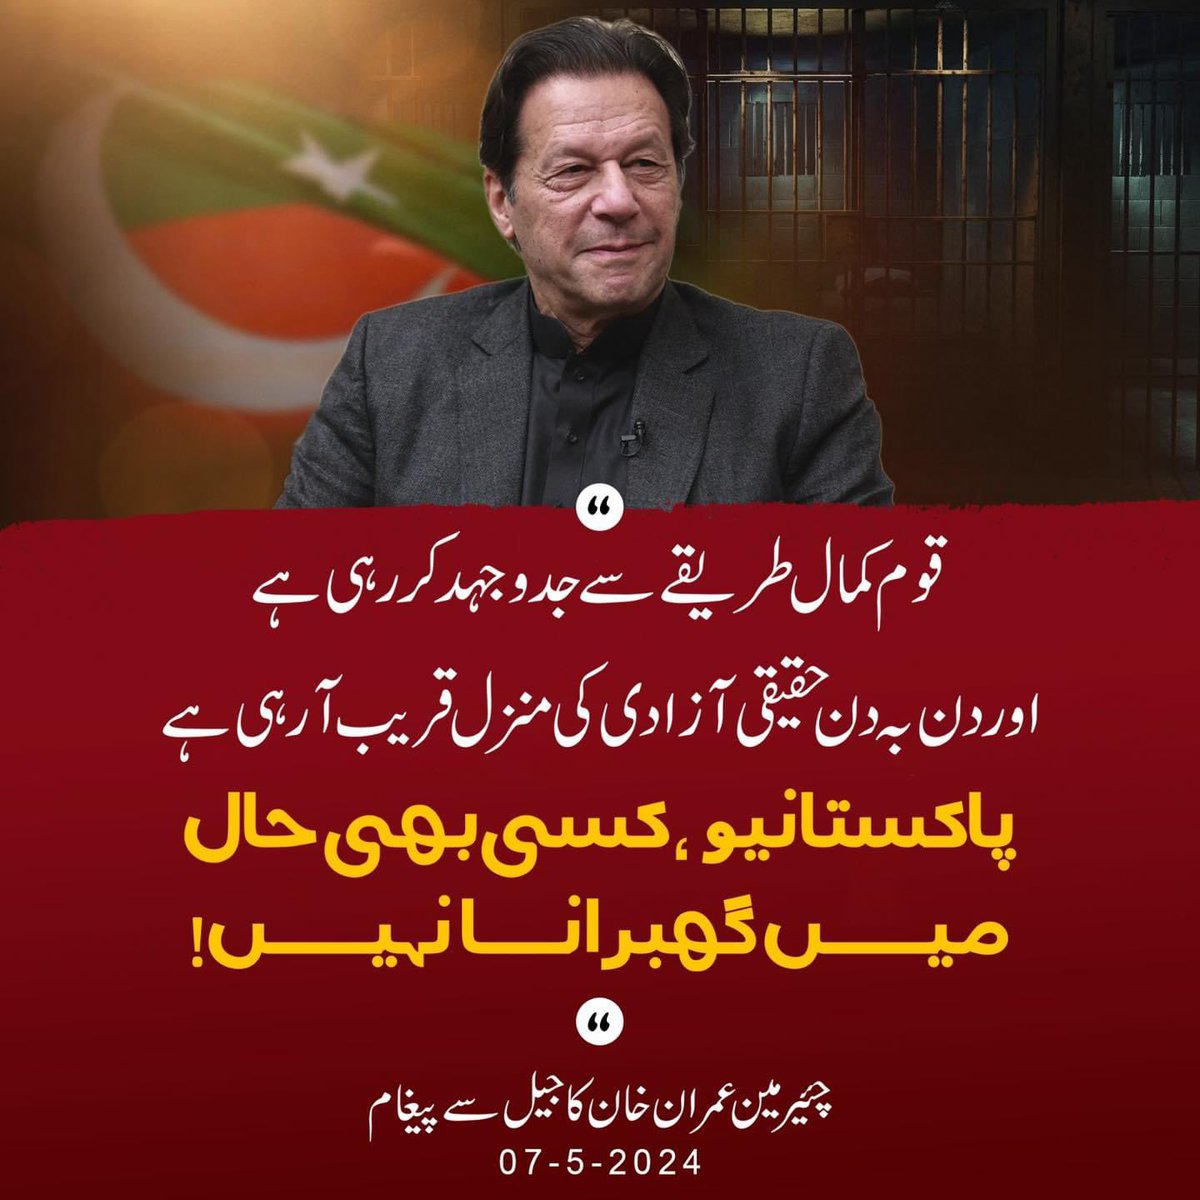 عمران خان کا پیغام۔۔